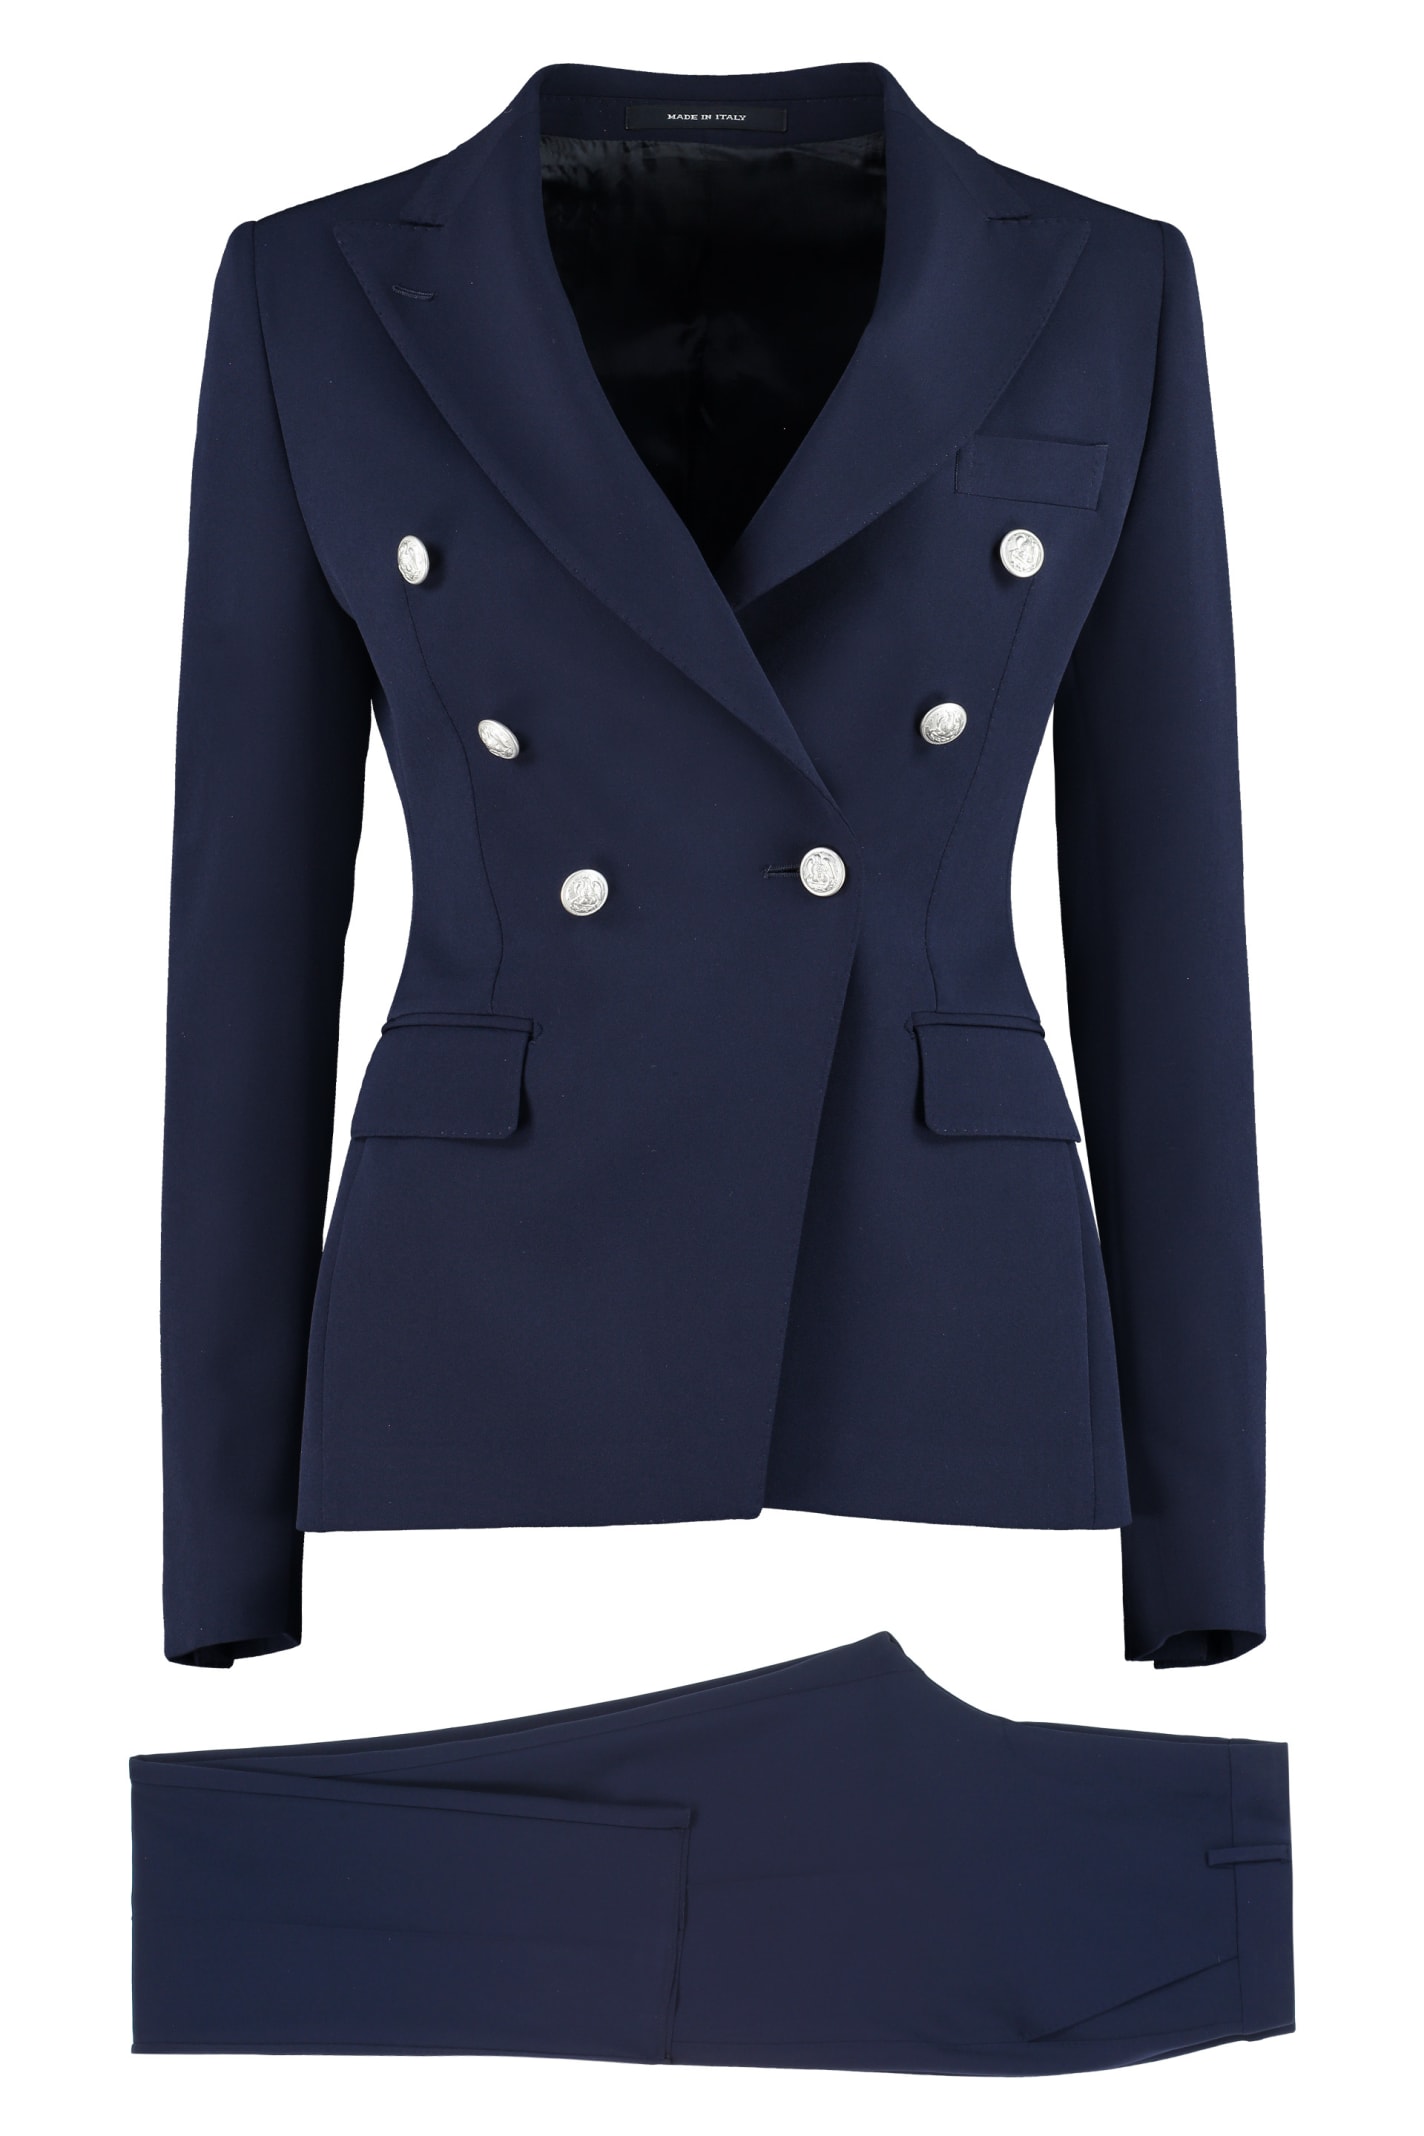 Photo of  Tagliatore 0205 Two-piece Suit- shop Tagliatore Dresses online sales